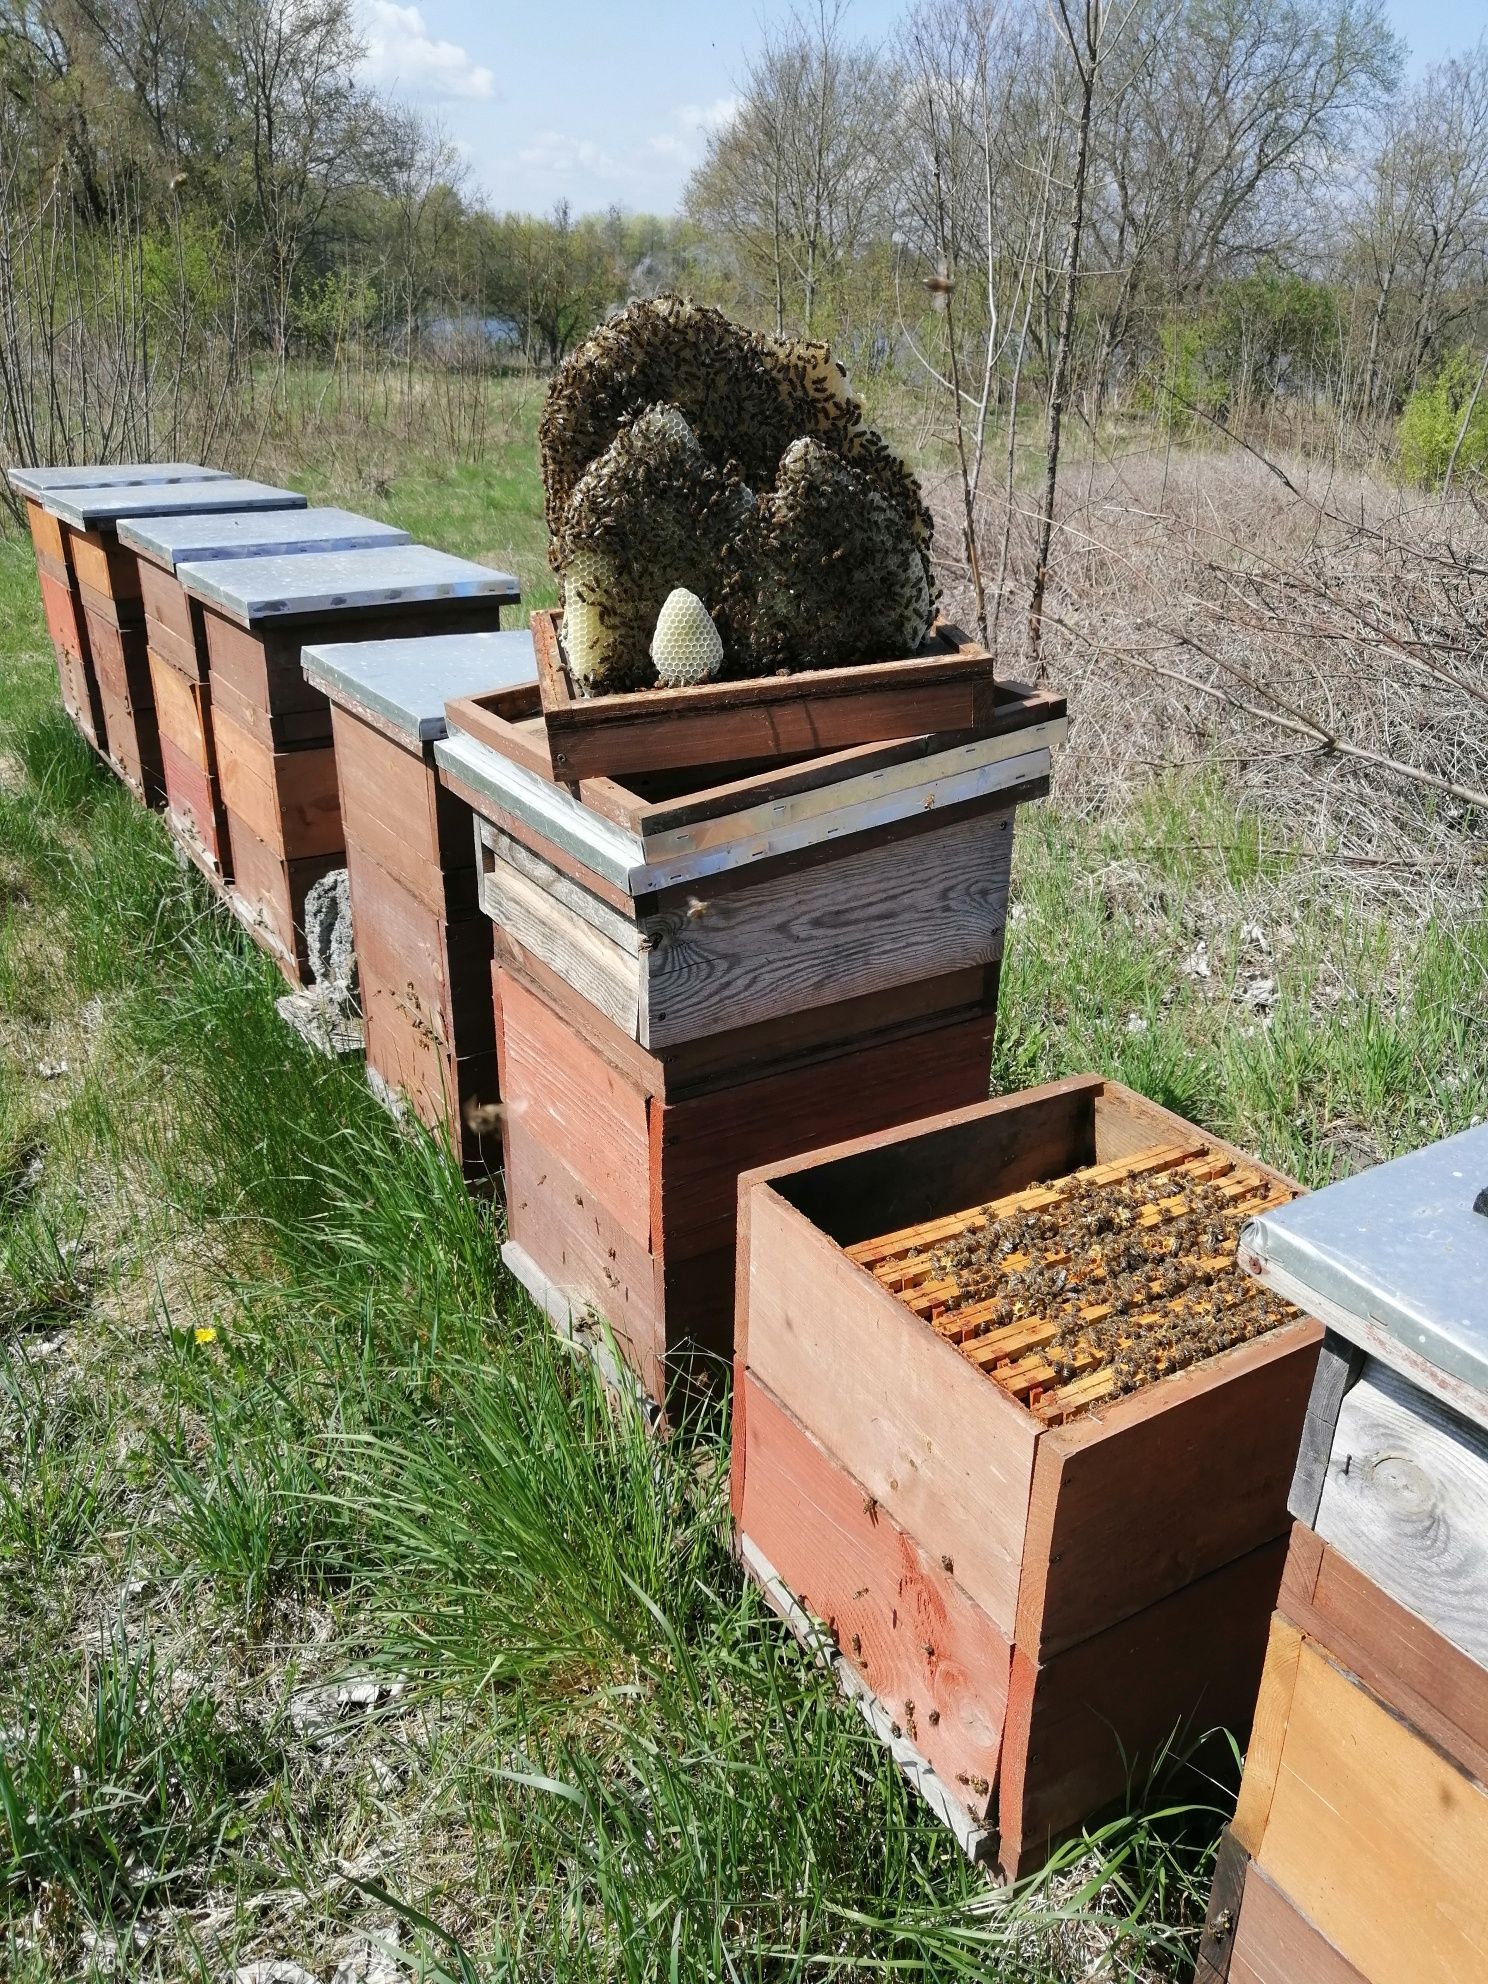 Pyszny naturalny MIÓD prosto od pszczelarza - Pasieka pod Lipami